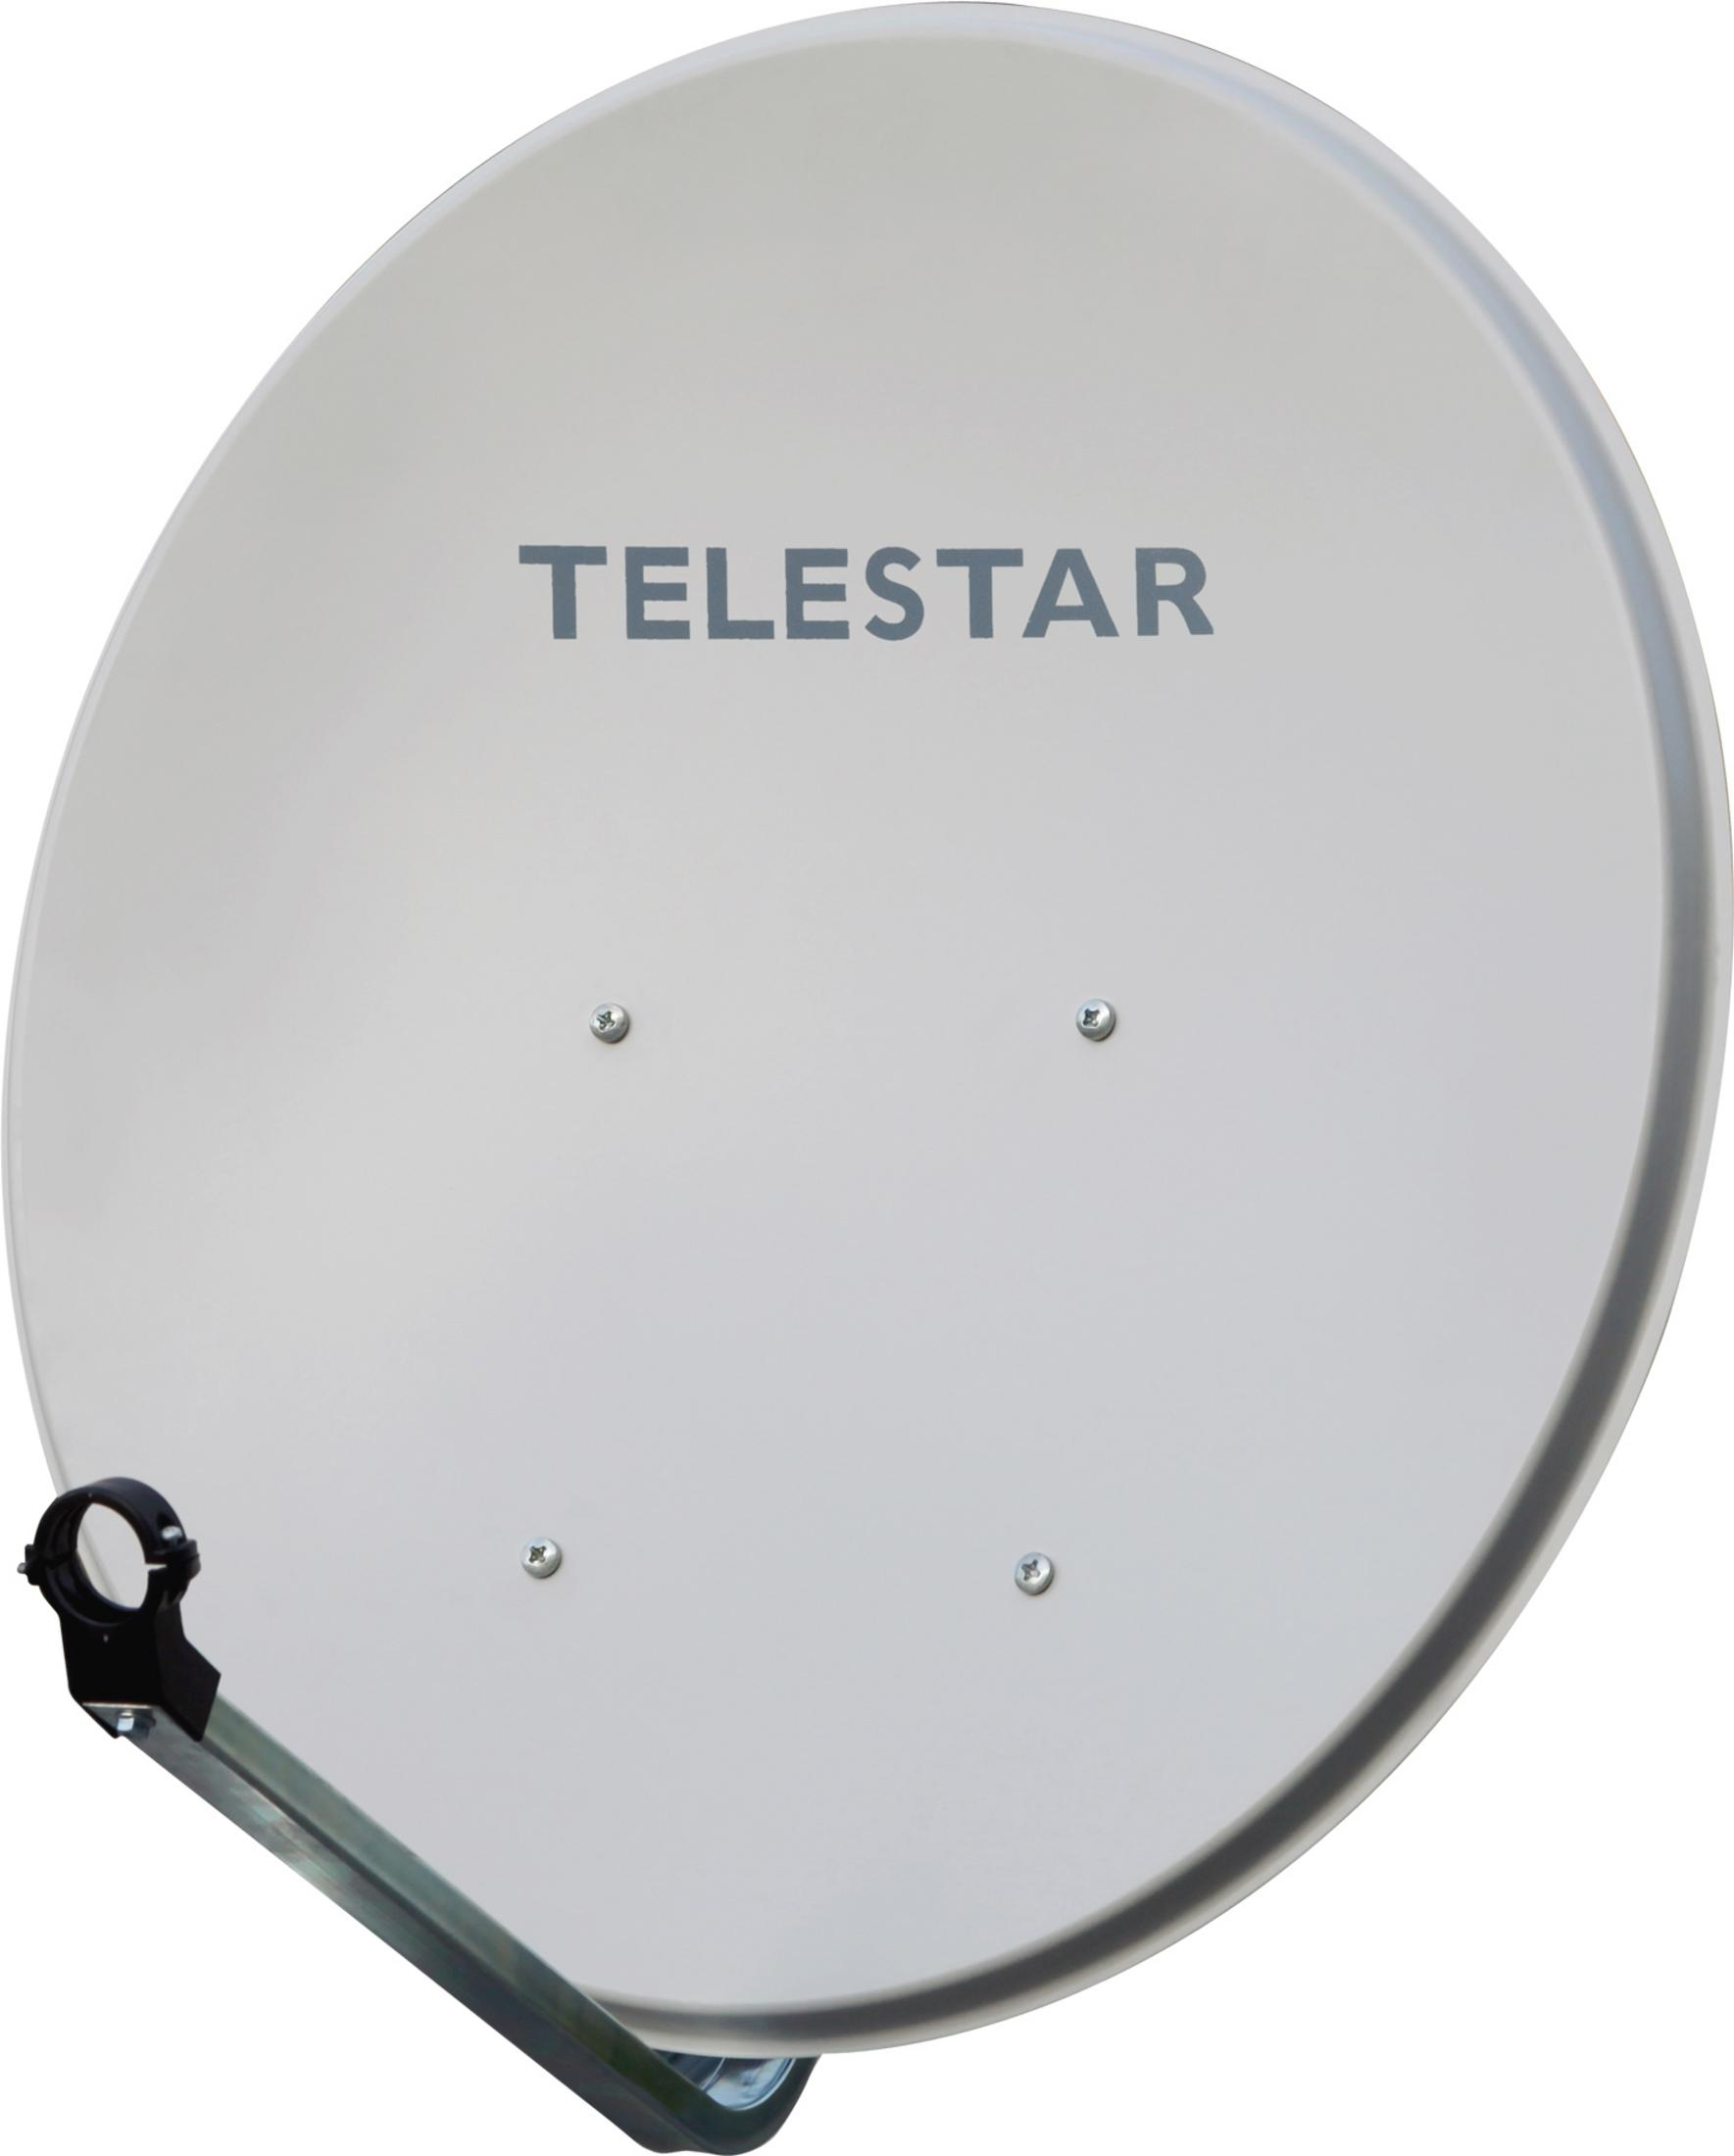 TELESTAR 80S Satellitenantenne DIGIRAPID 5109781